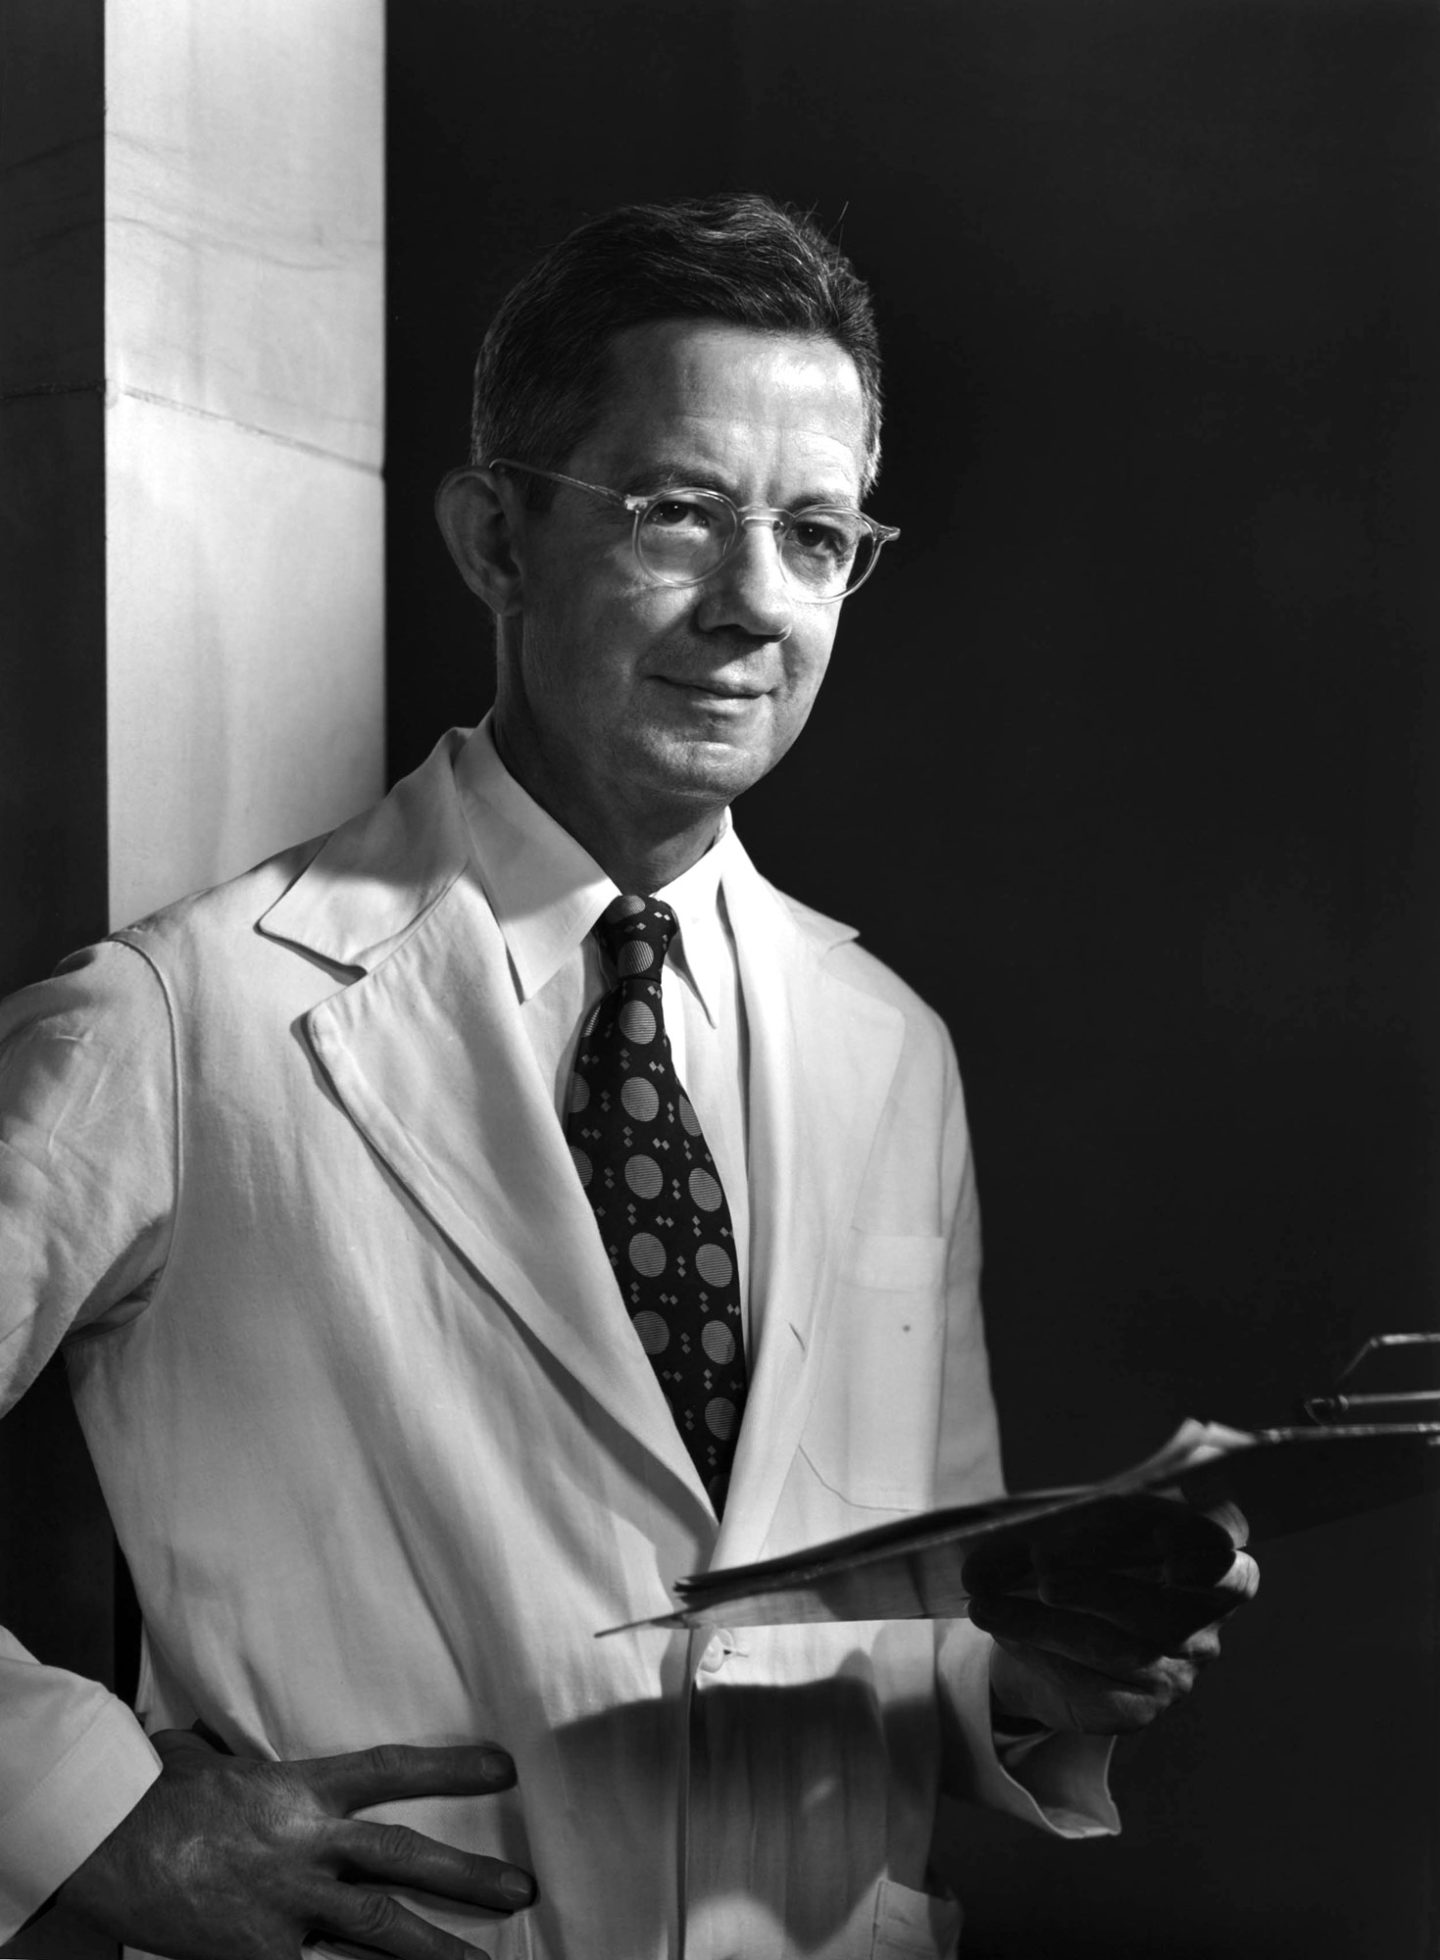 Dr. Alfred Blalock